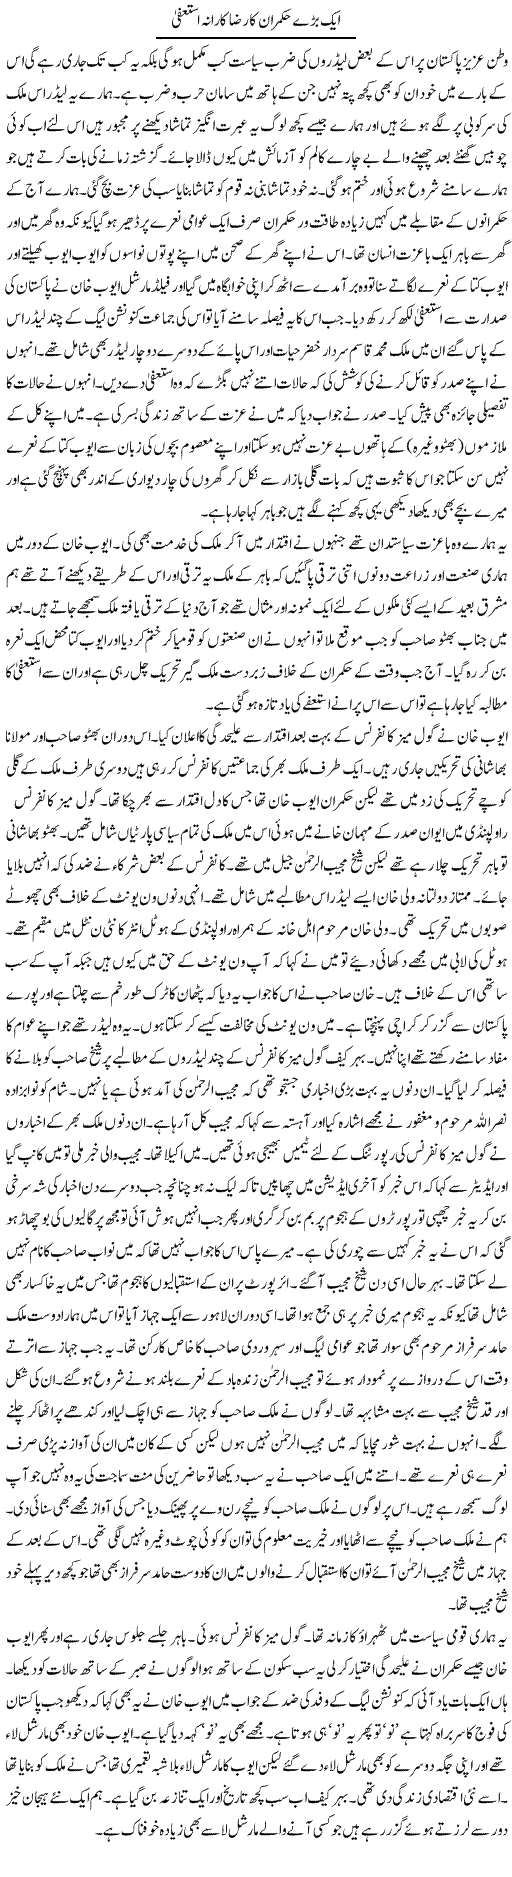 Aik Bare Hukmaran Ka Razakarana Istefa | Abdul Qadir Hassan | Daily Urdu Columns